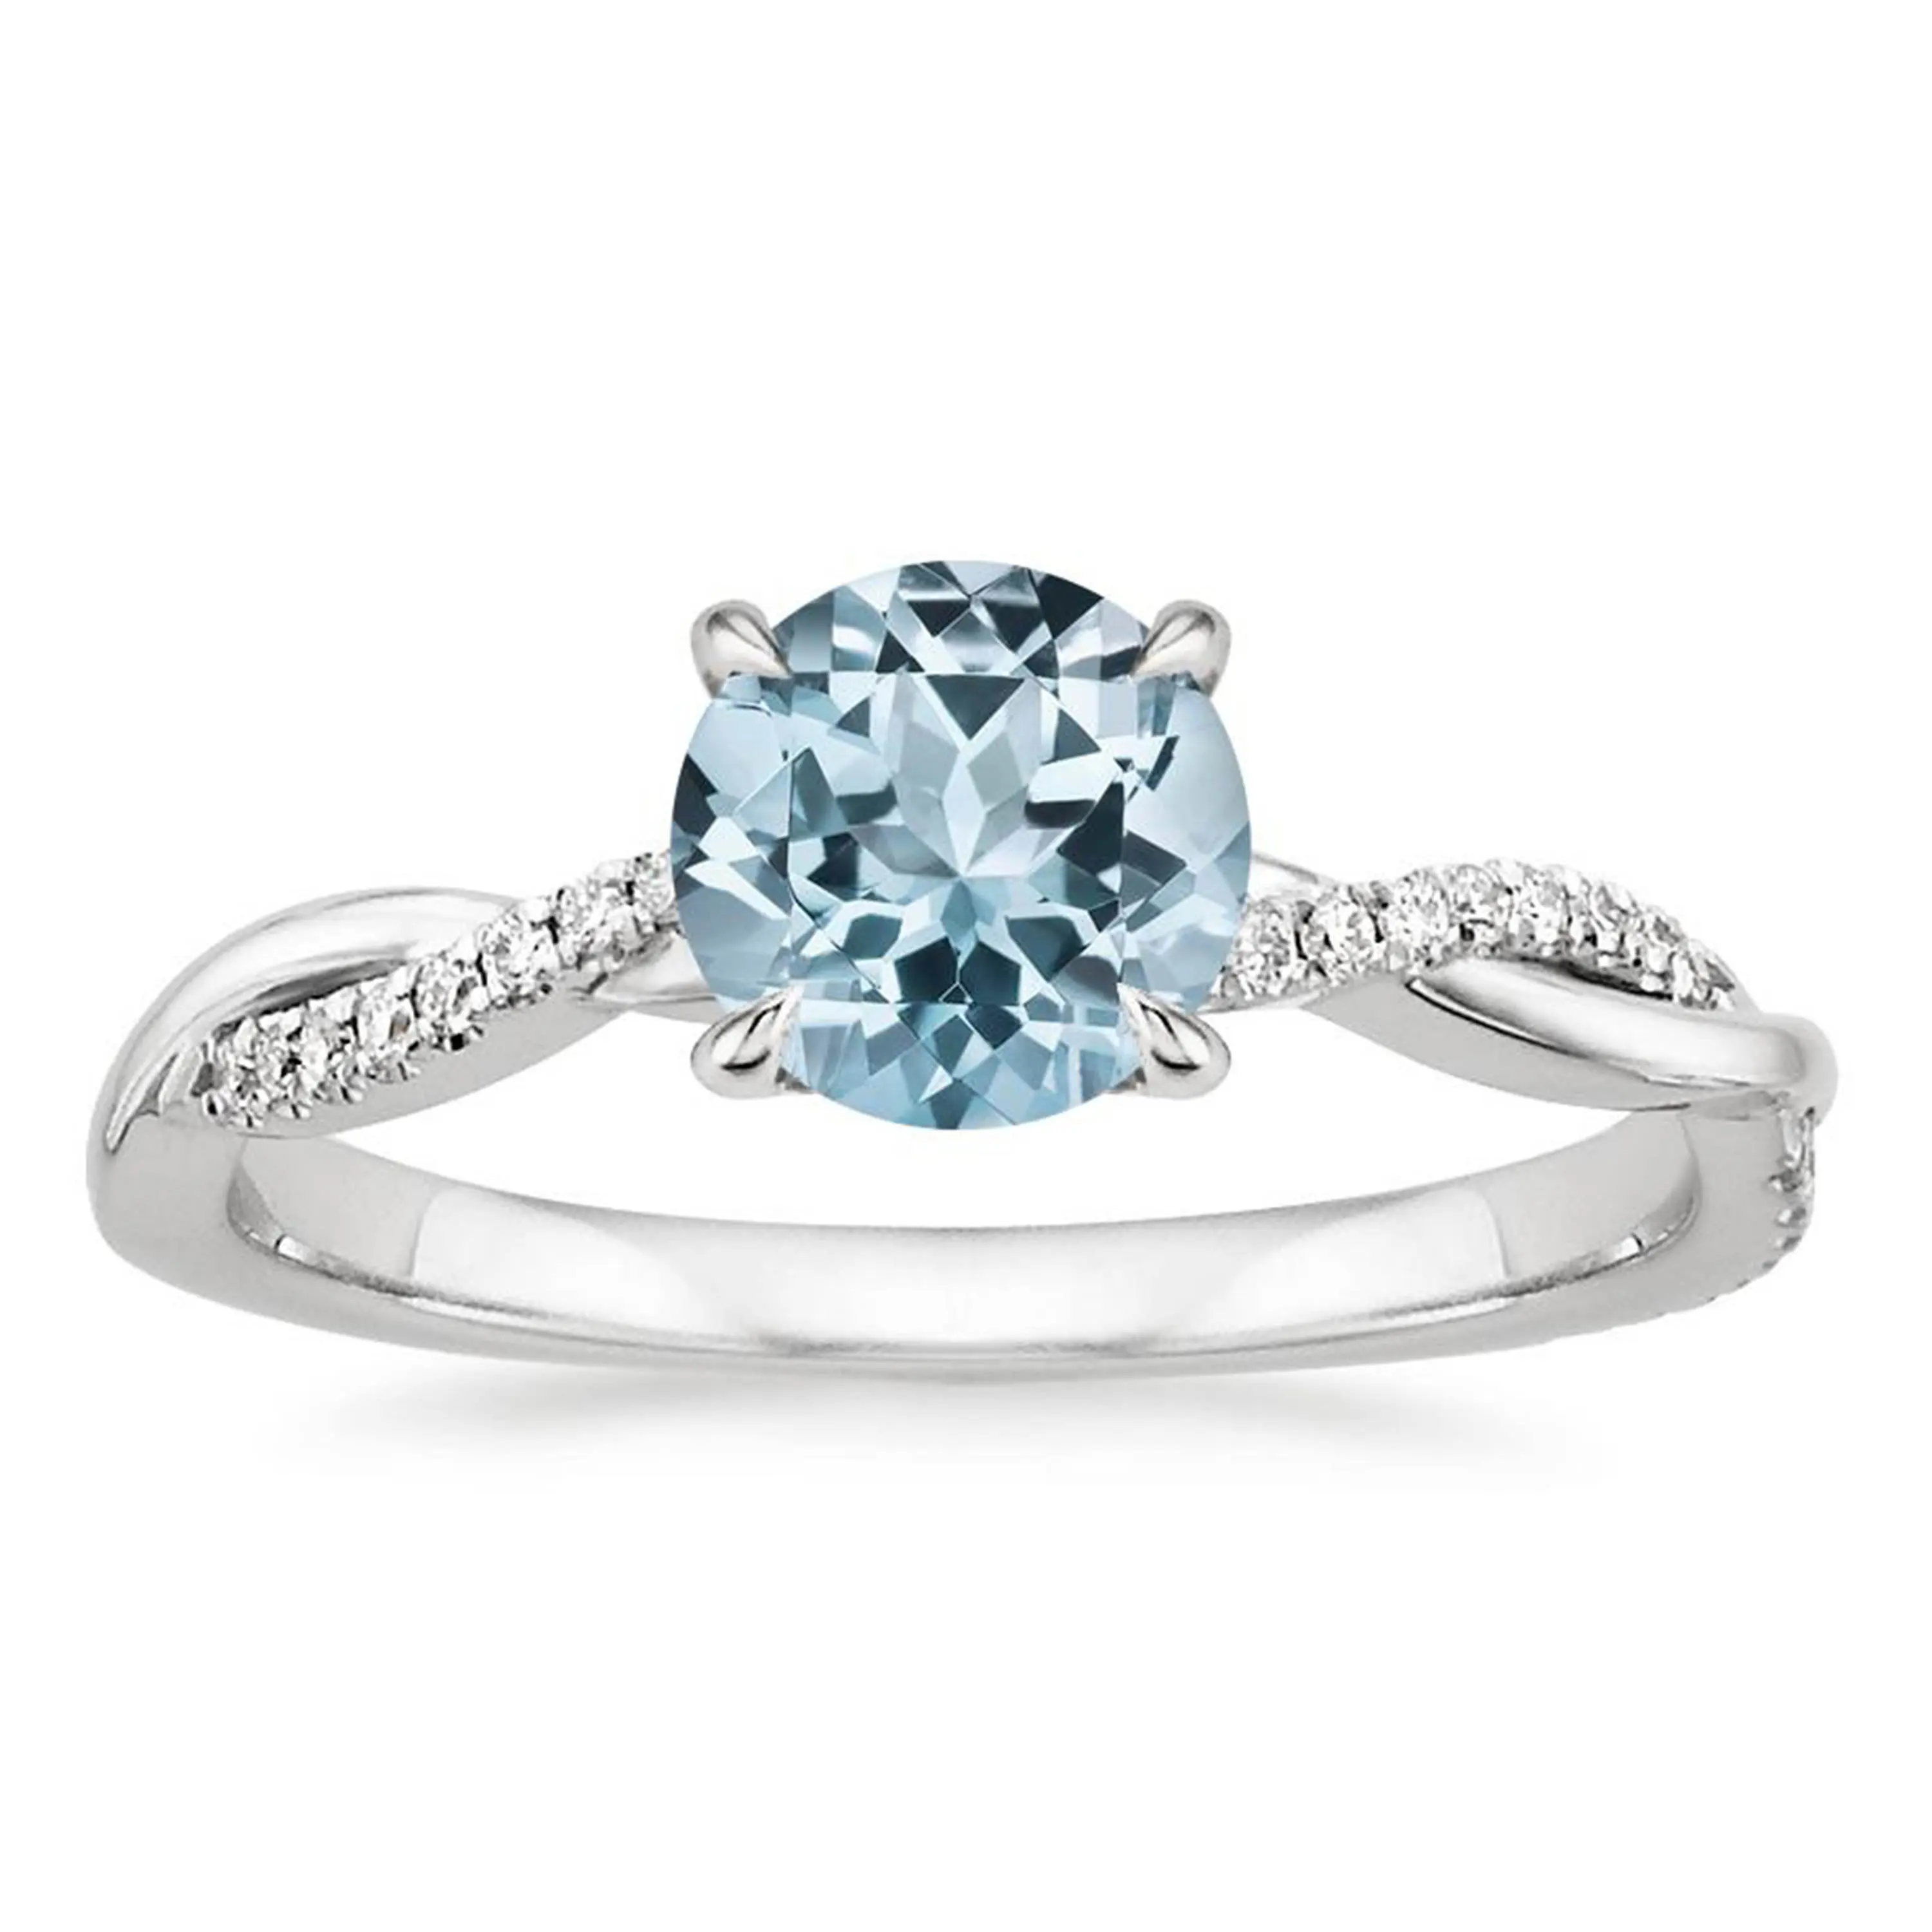 Wholesale 925 sterling silver jewelry white zircon with round aquamarine twist design wedding rings